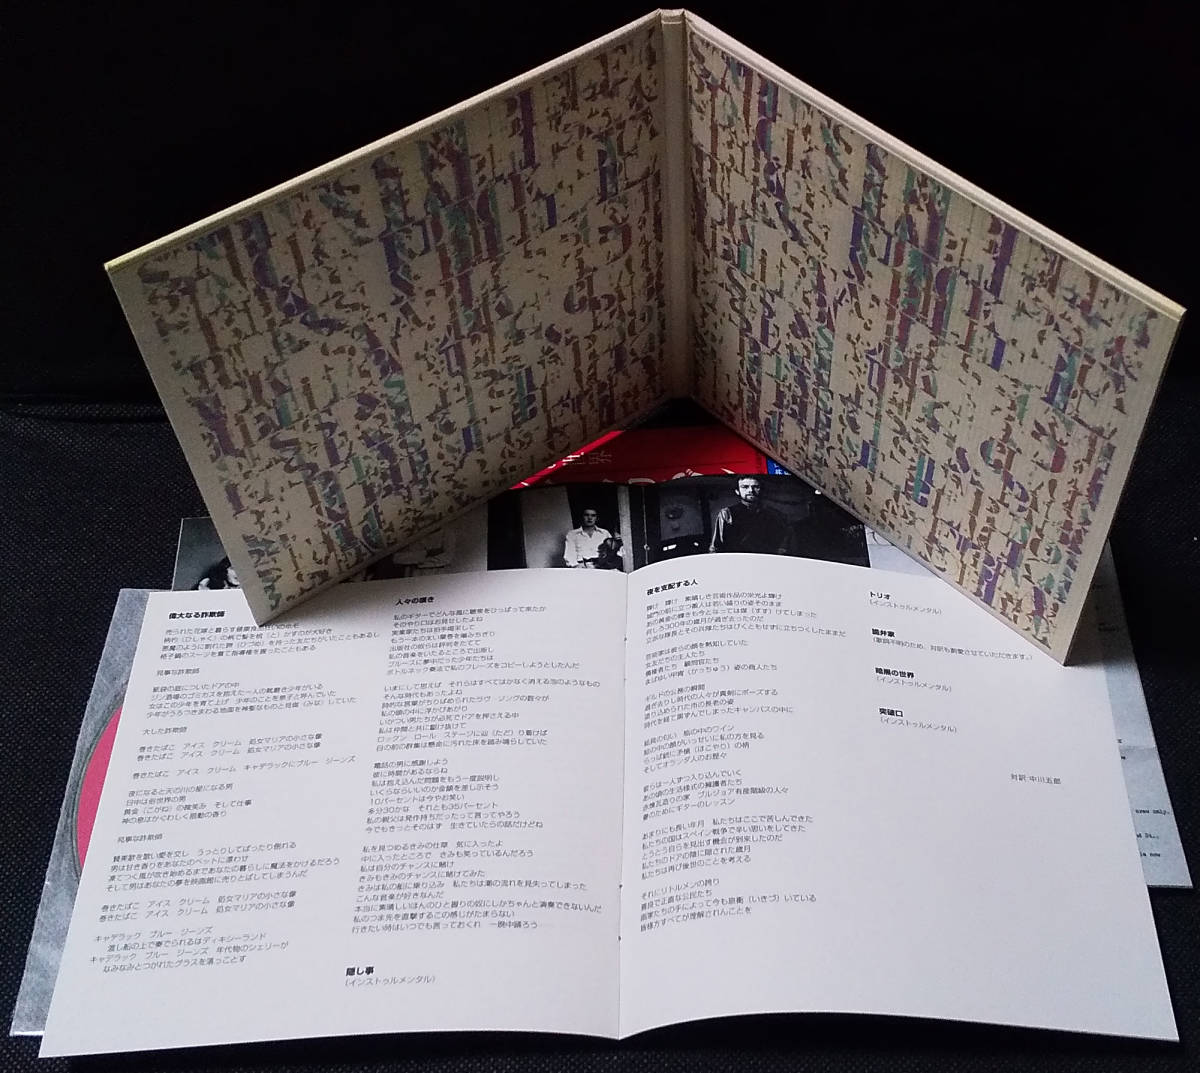 King Crimson - [ с лентой ] тьма. мир /Starless And Bible Black записано в Японии Gold CD, Remastered, gatefold PCCY-01426 30th Anniversary 2000 год 